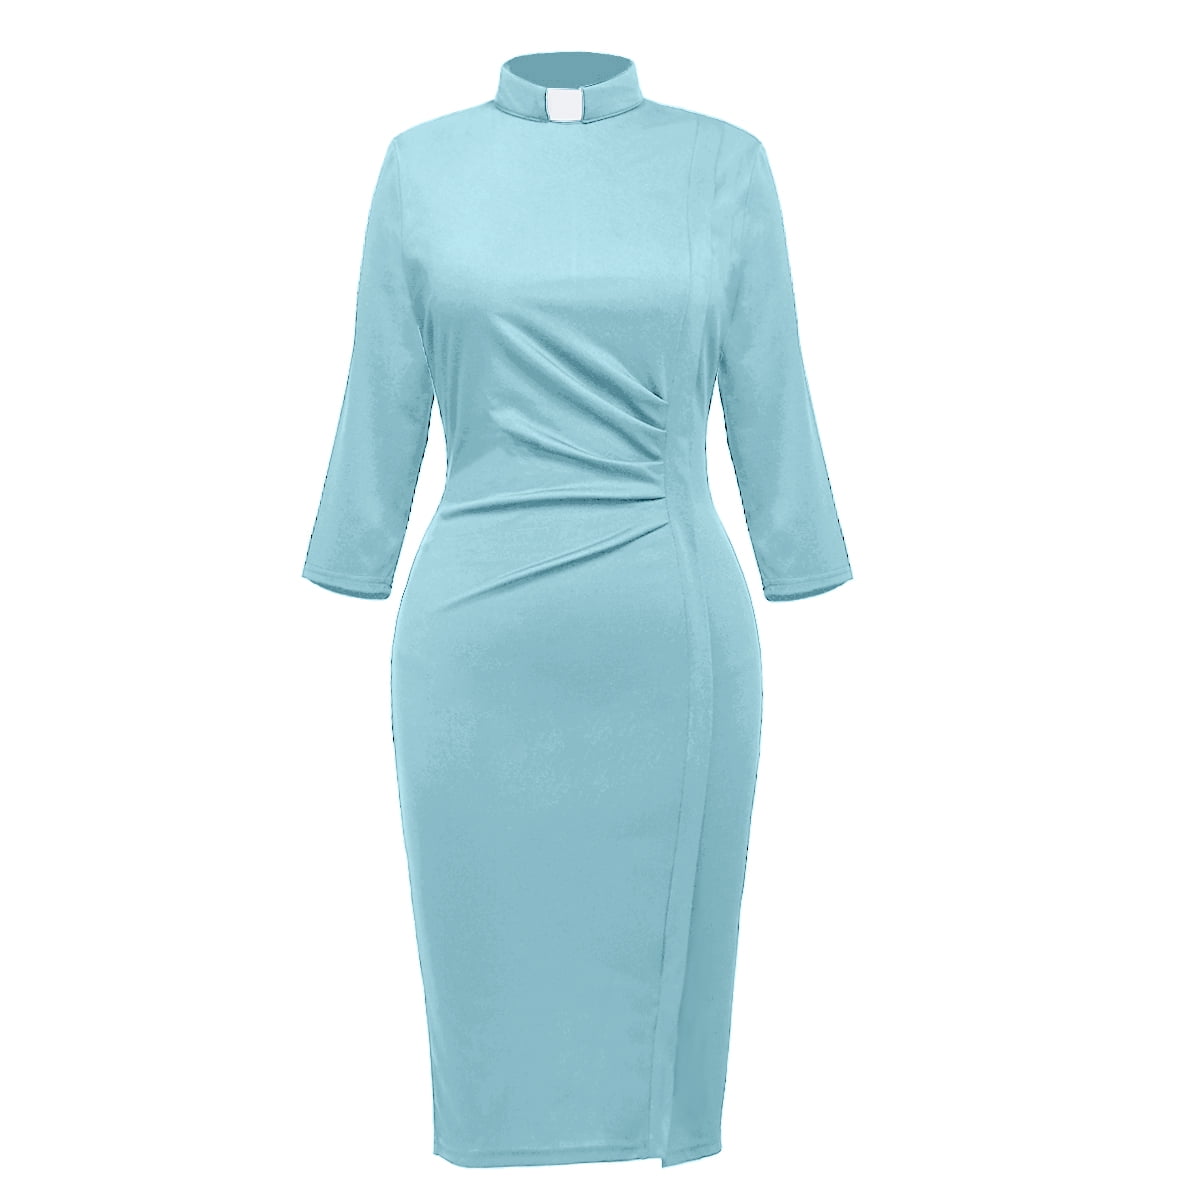 GRACEART Catholic Church Women Clergy Tab Collar Dress 3/4 Sleeve ...